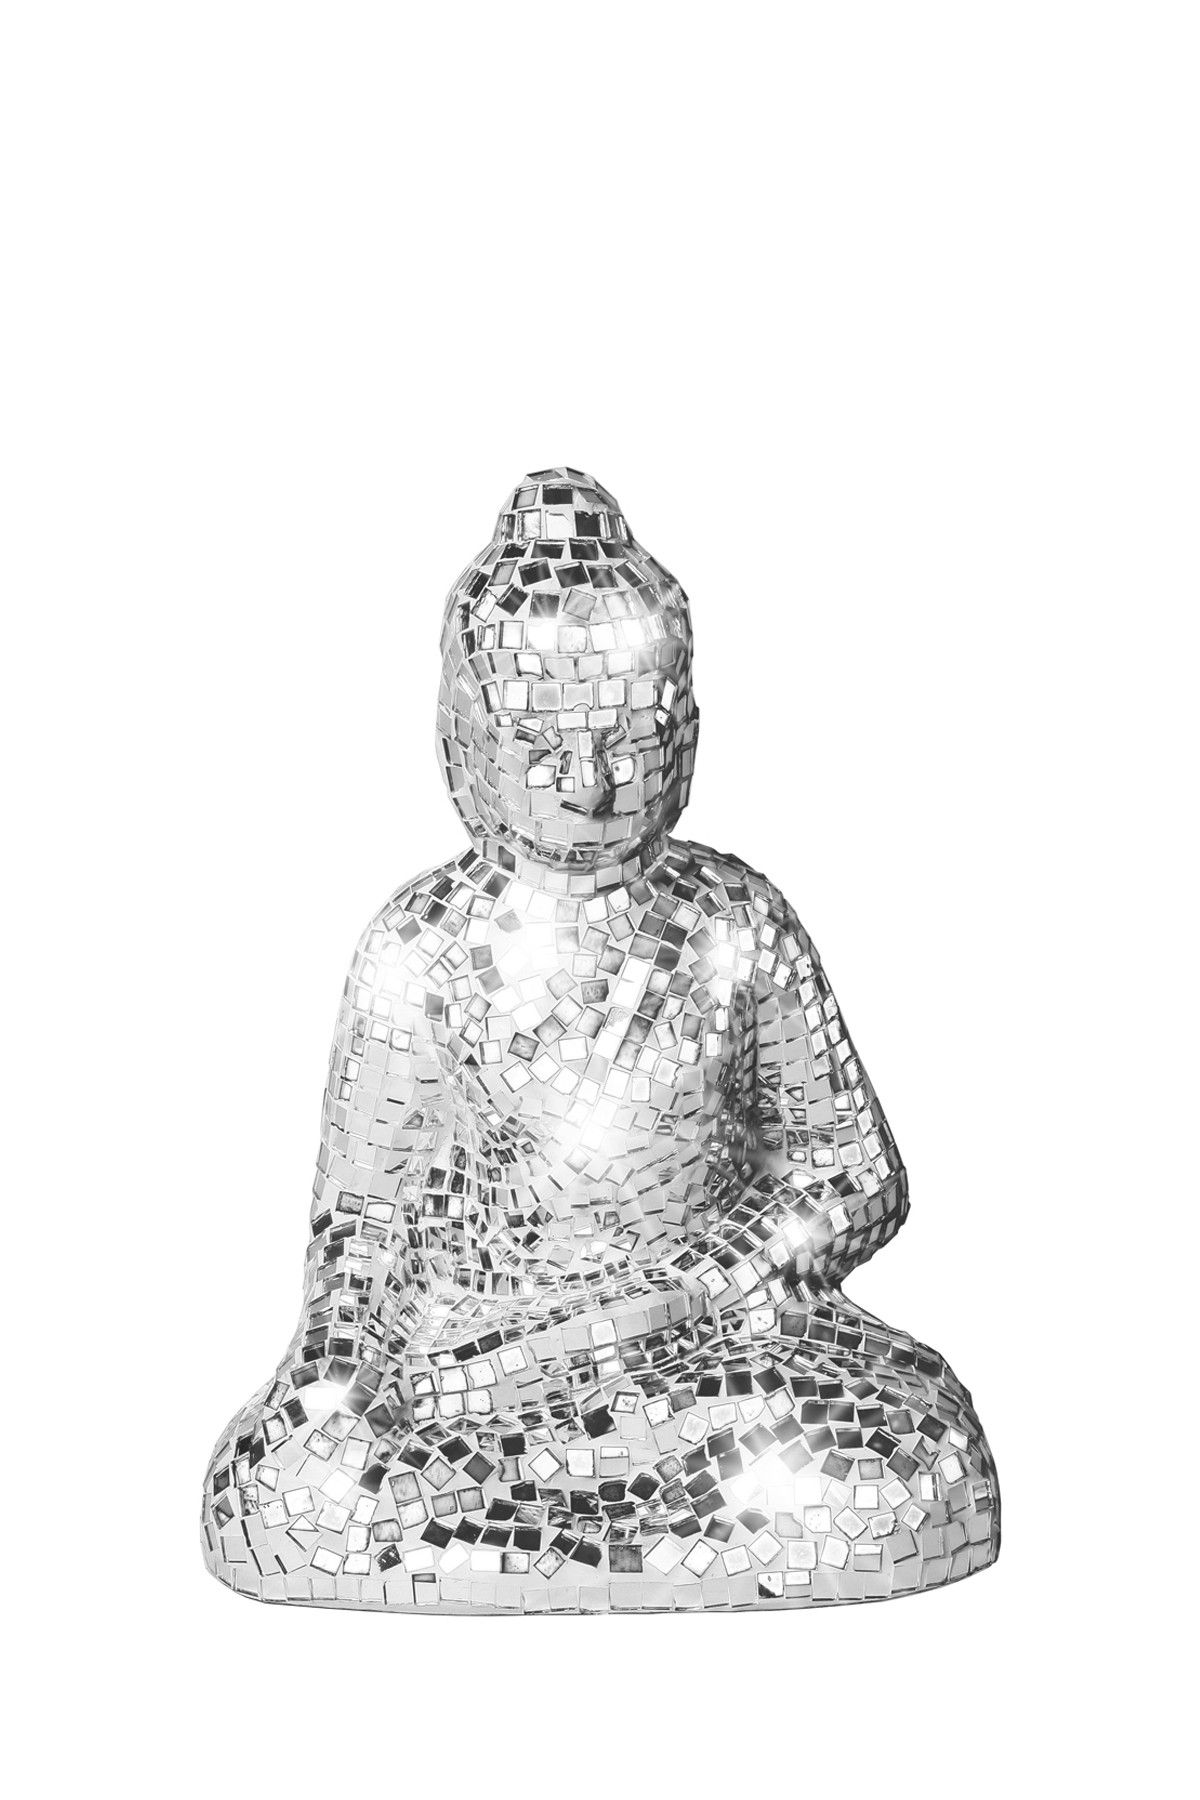 Detail Mirror Ball Buddha Statue Nomer 4